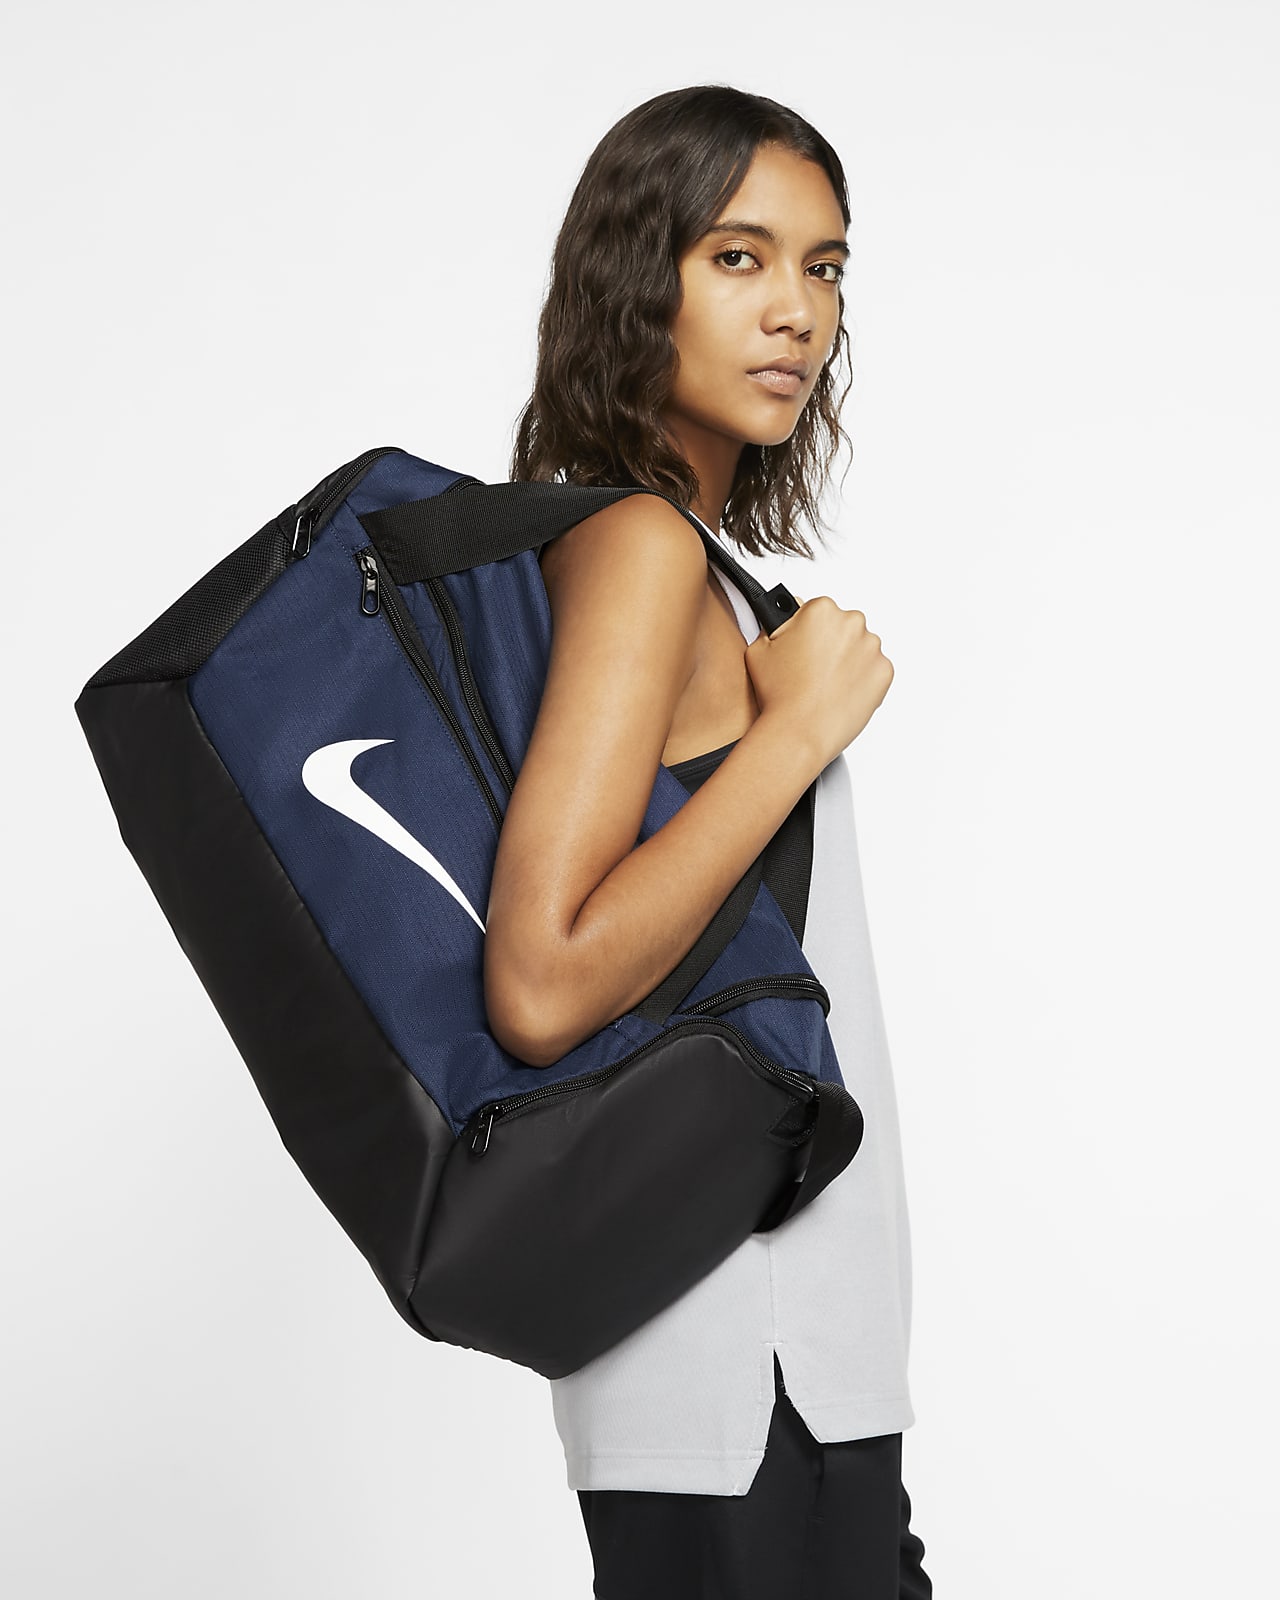 Nike Brasilia 9.5 Training Duffel Bag (Small, 41L). Nike NL